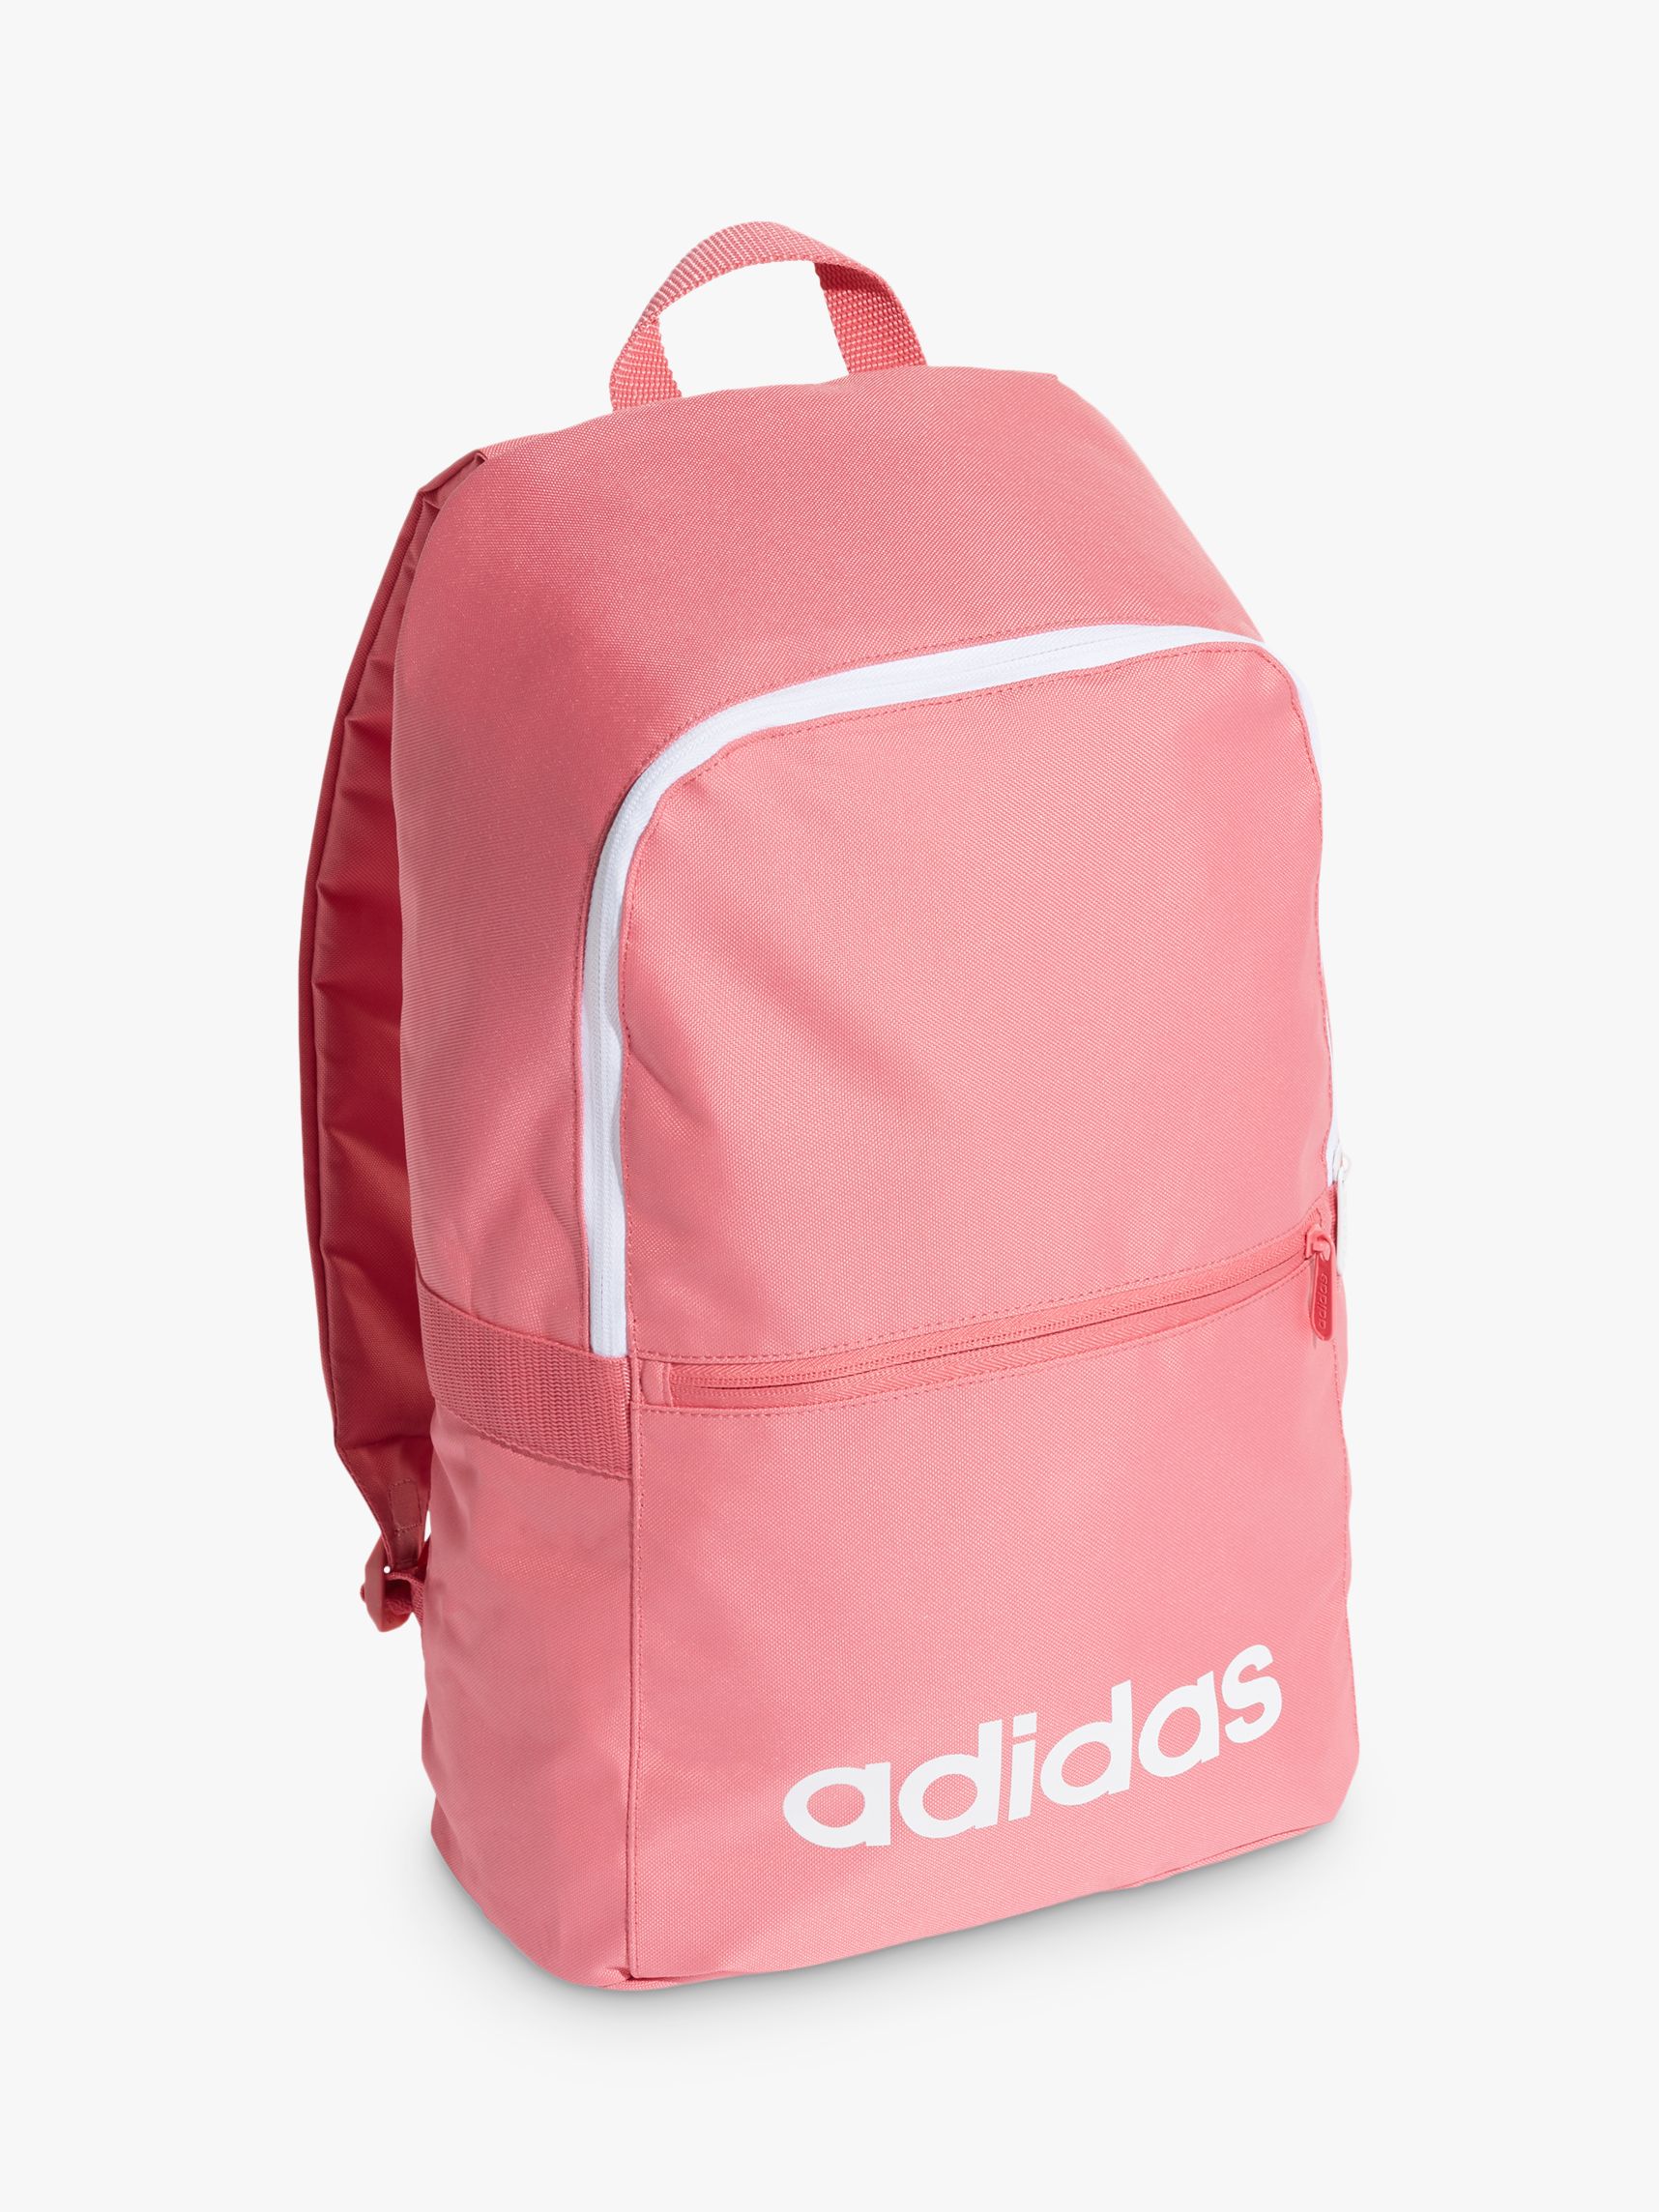 adidas daily backpack